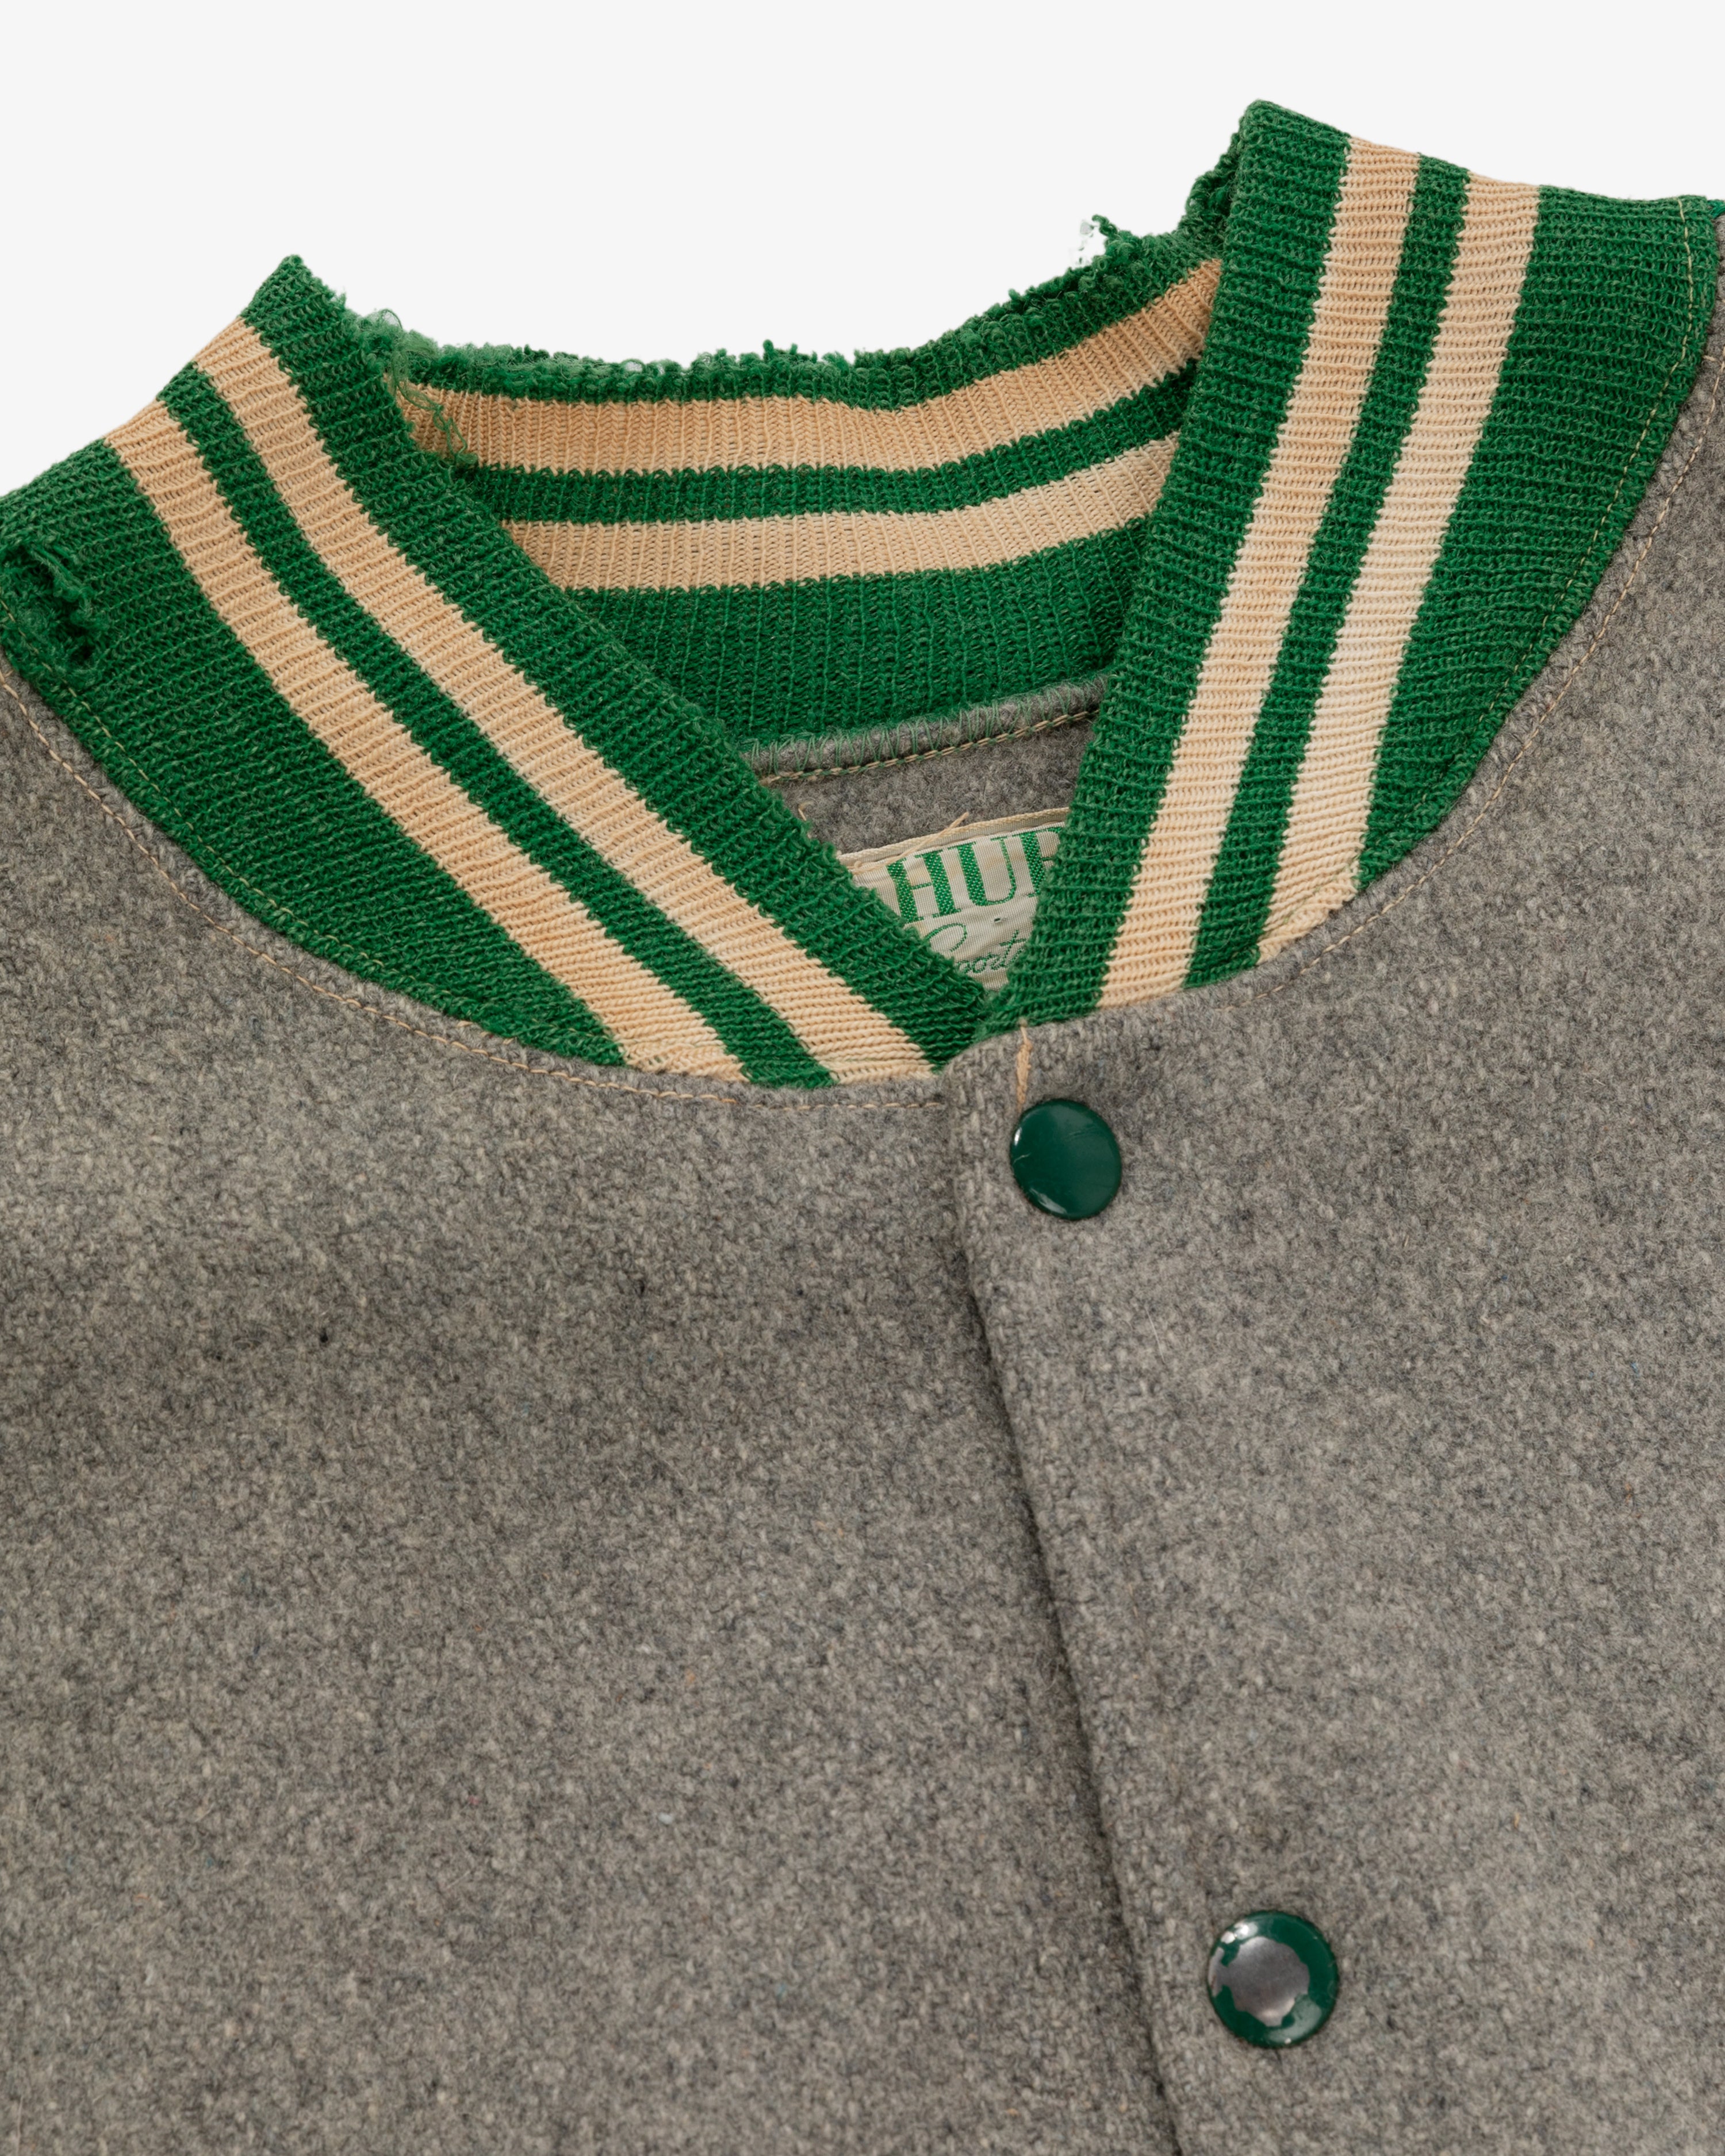 Vintage Babe Ruth Fresh Meadows Wool Varsity Jacket